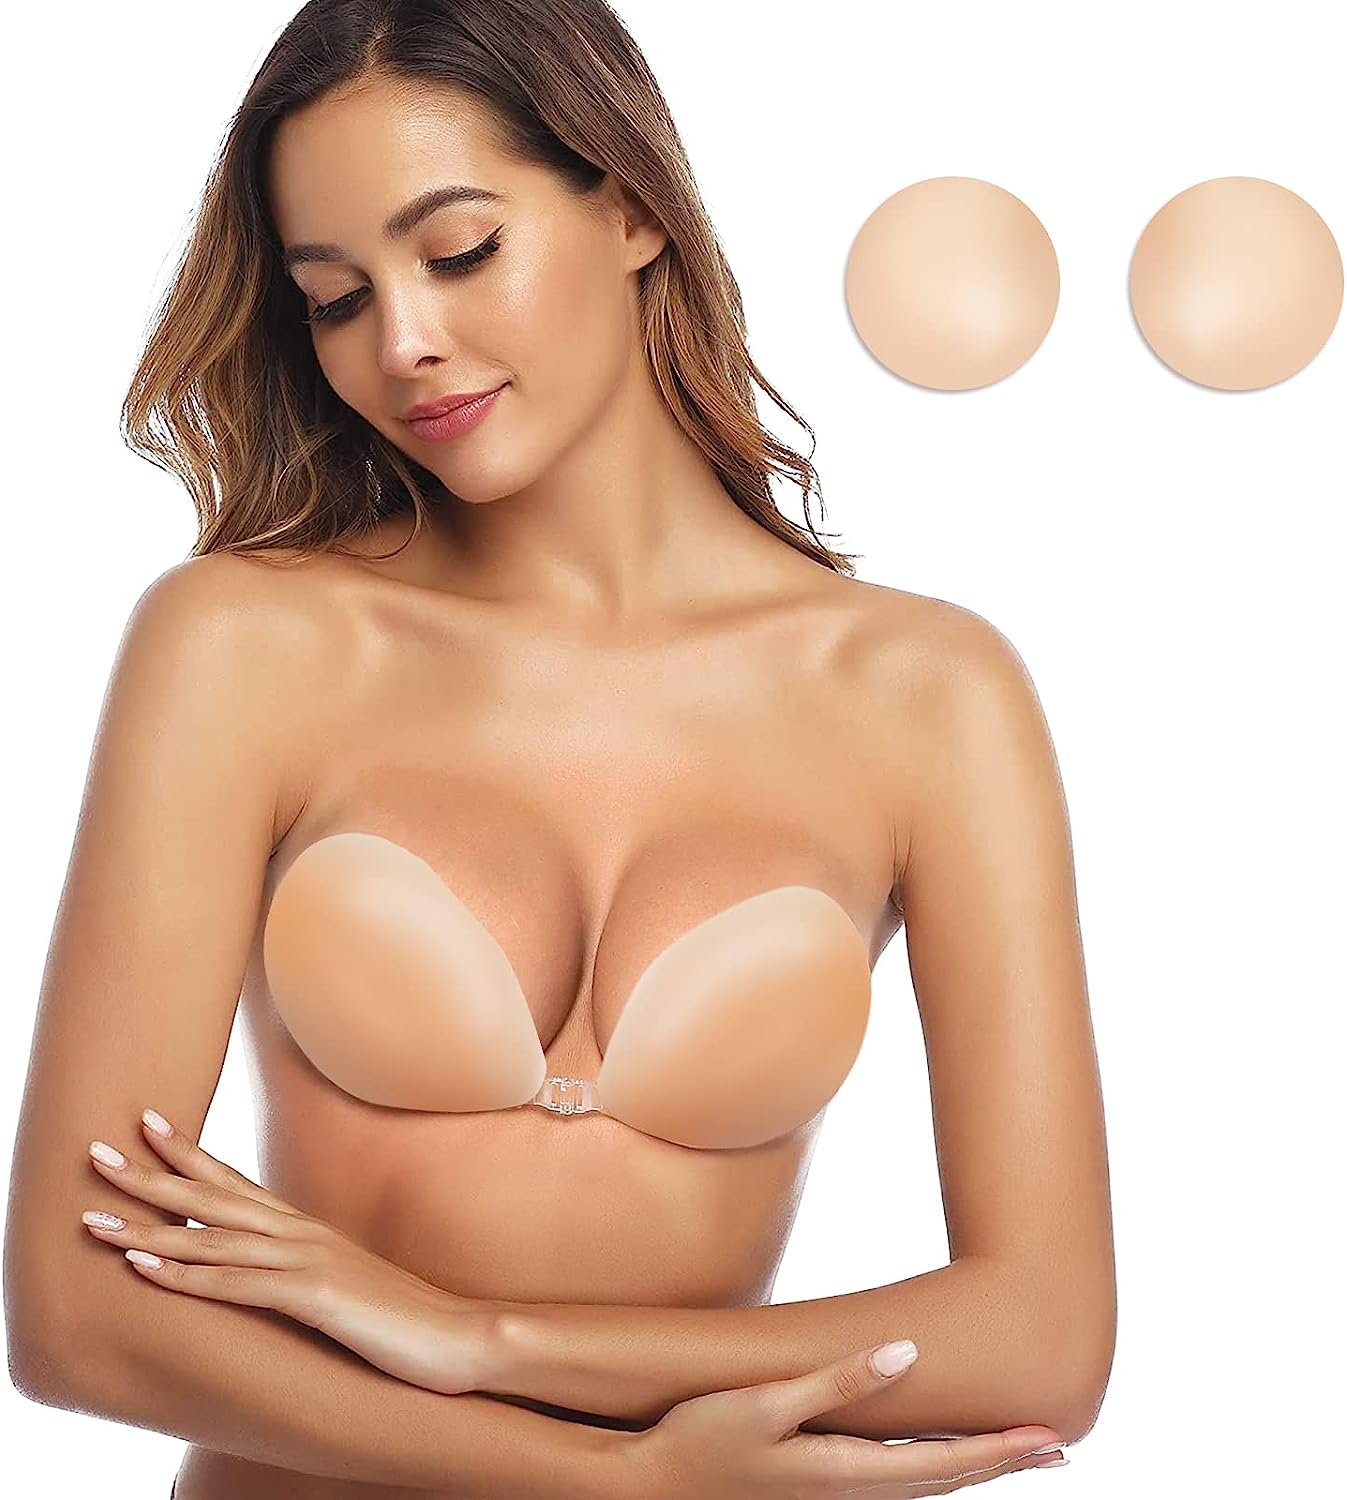 Women's Reusable Nipple Cover - Silicone Nipple Cover Bra Pad